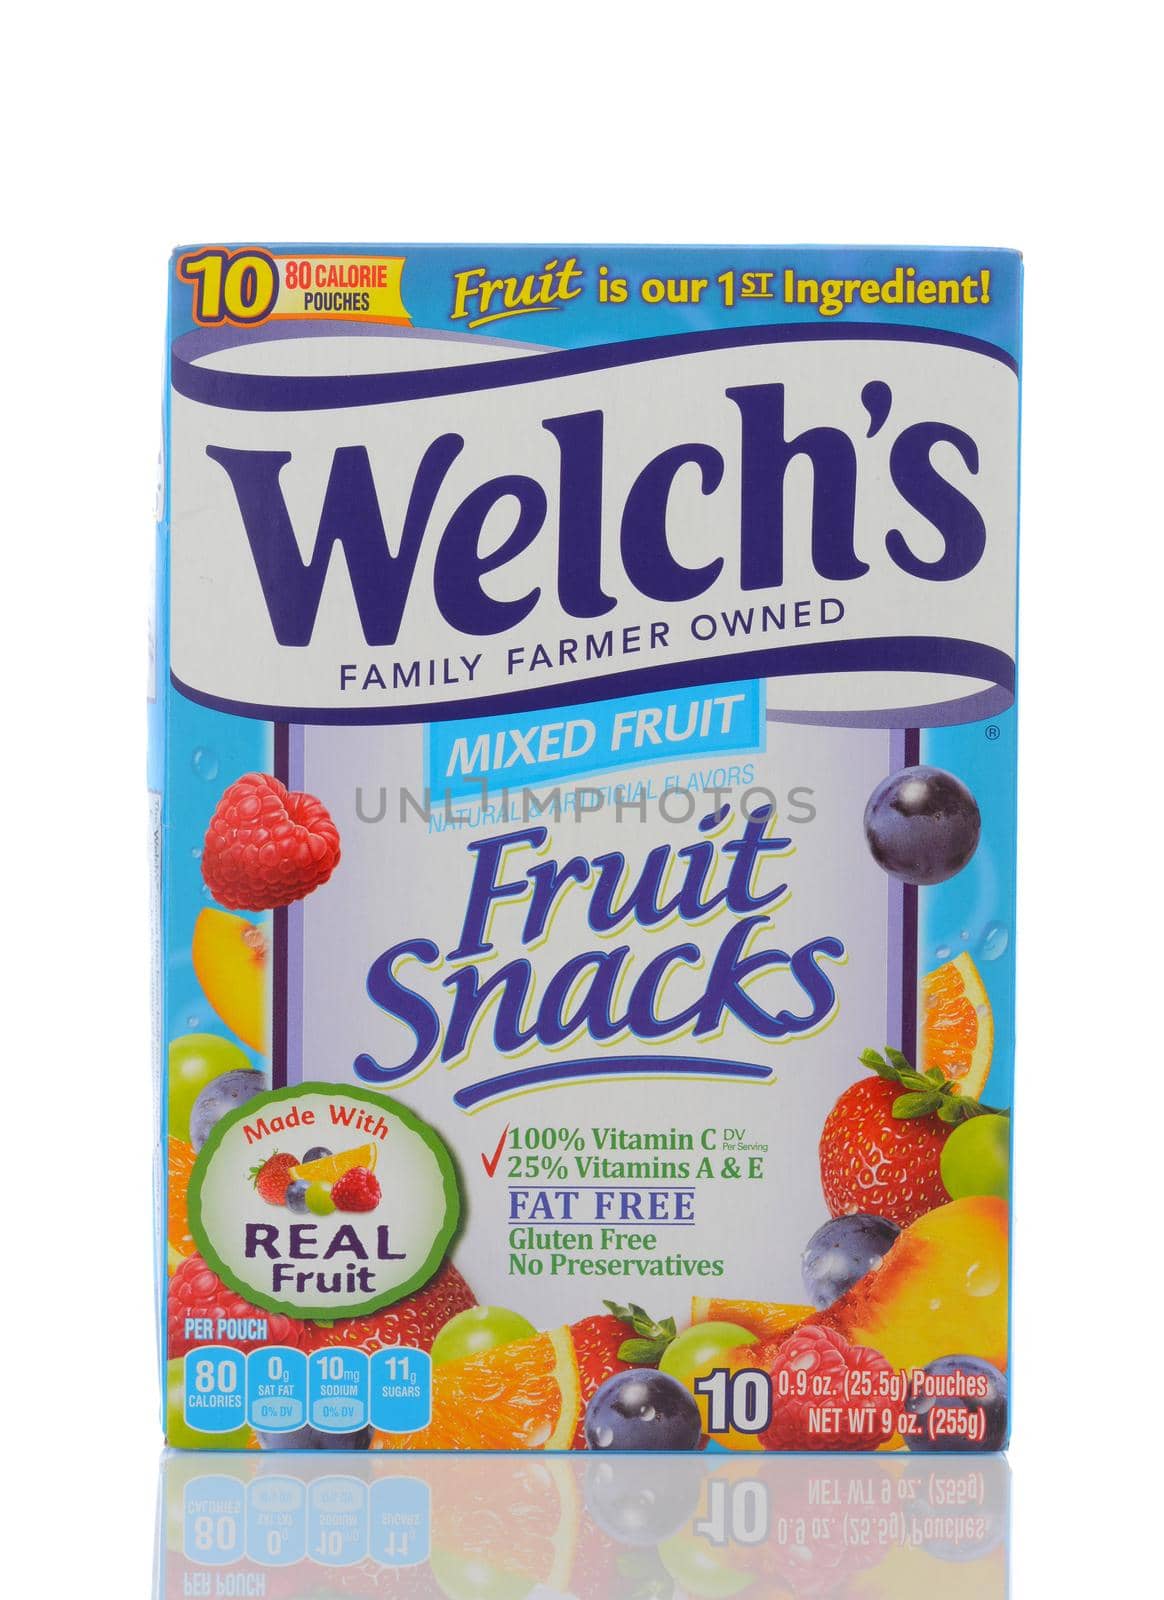 A box of Welch's Fruit Snacks by sCukrov